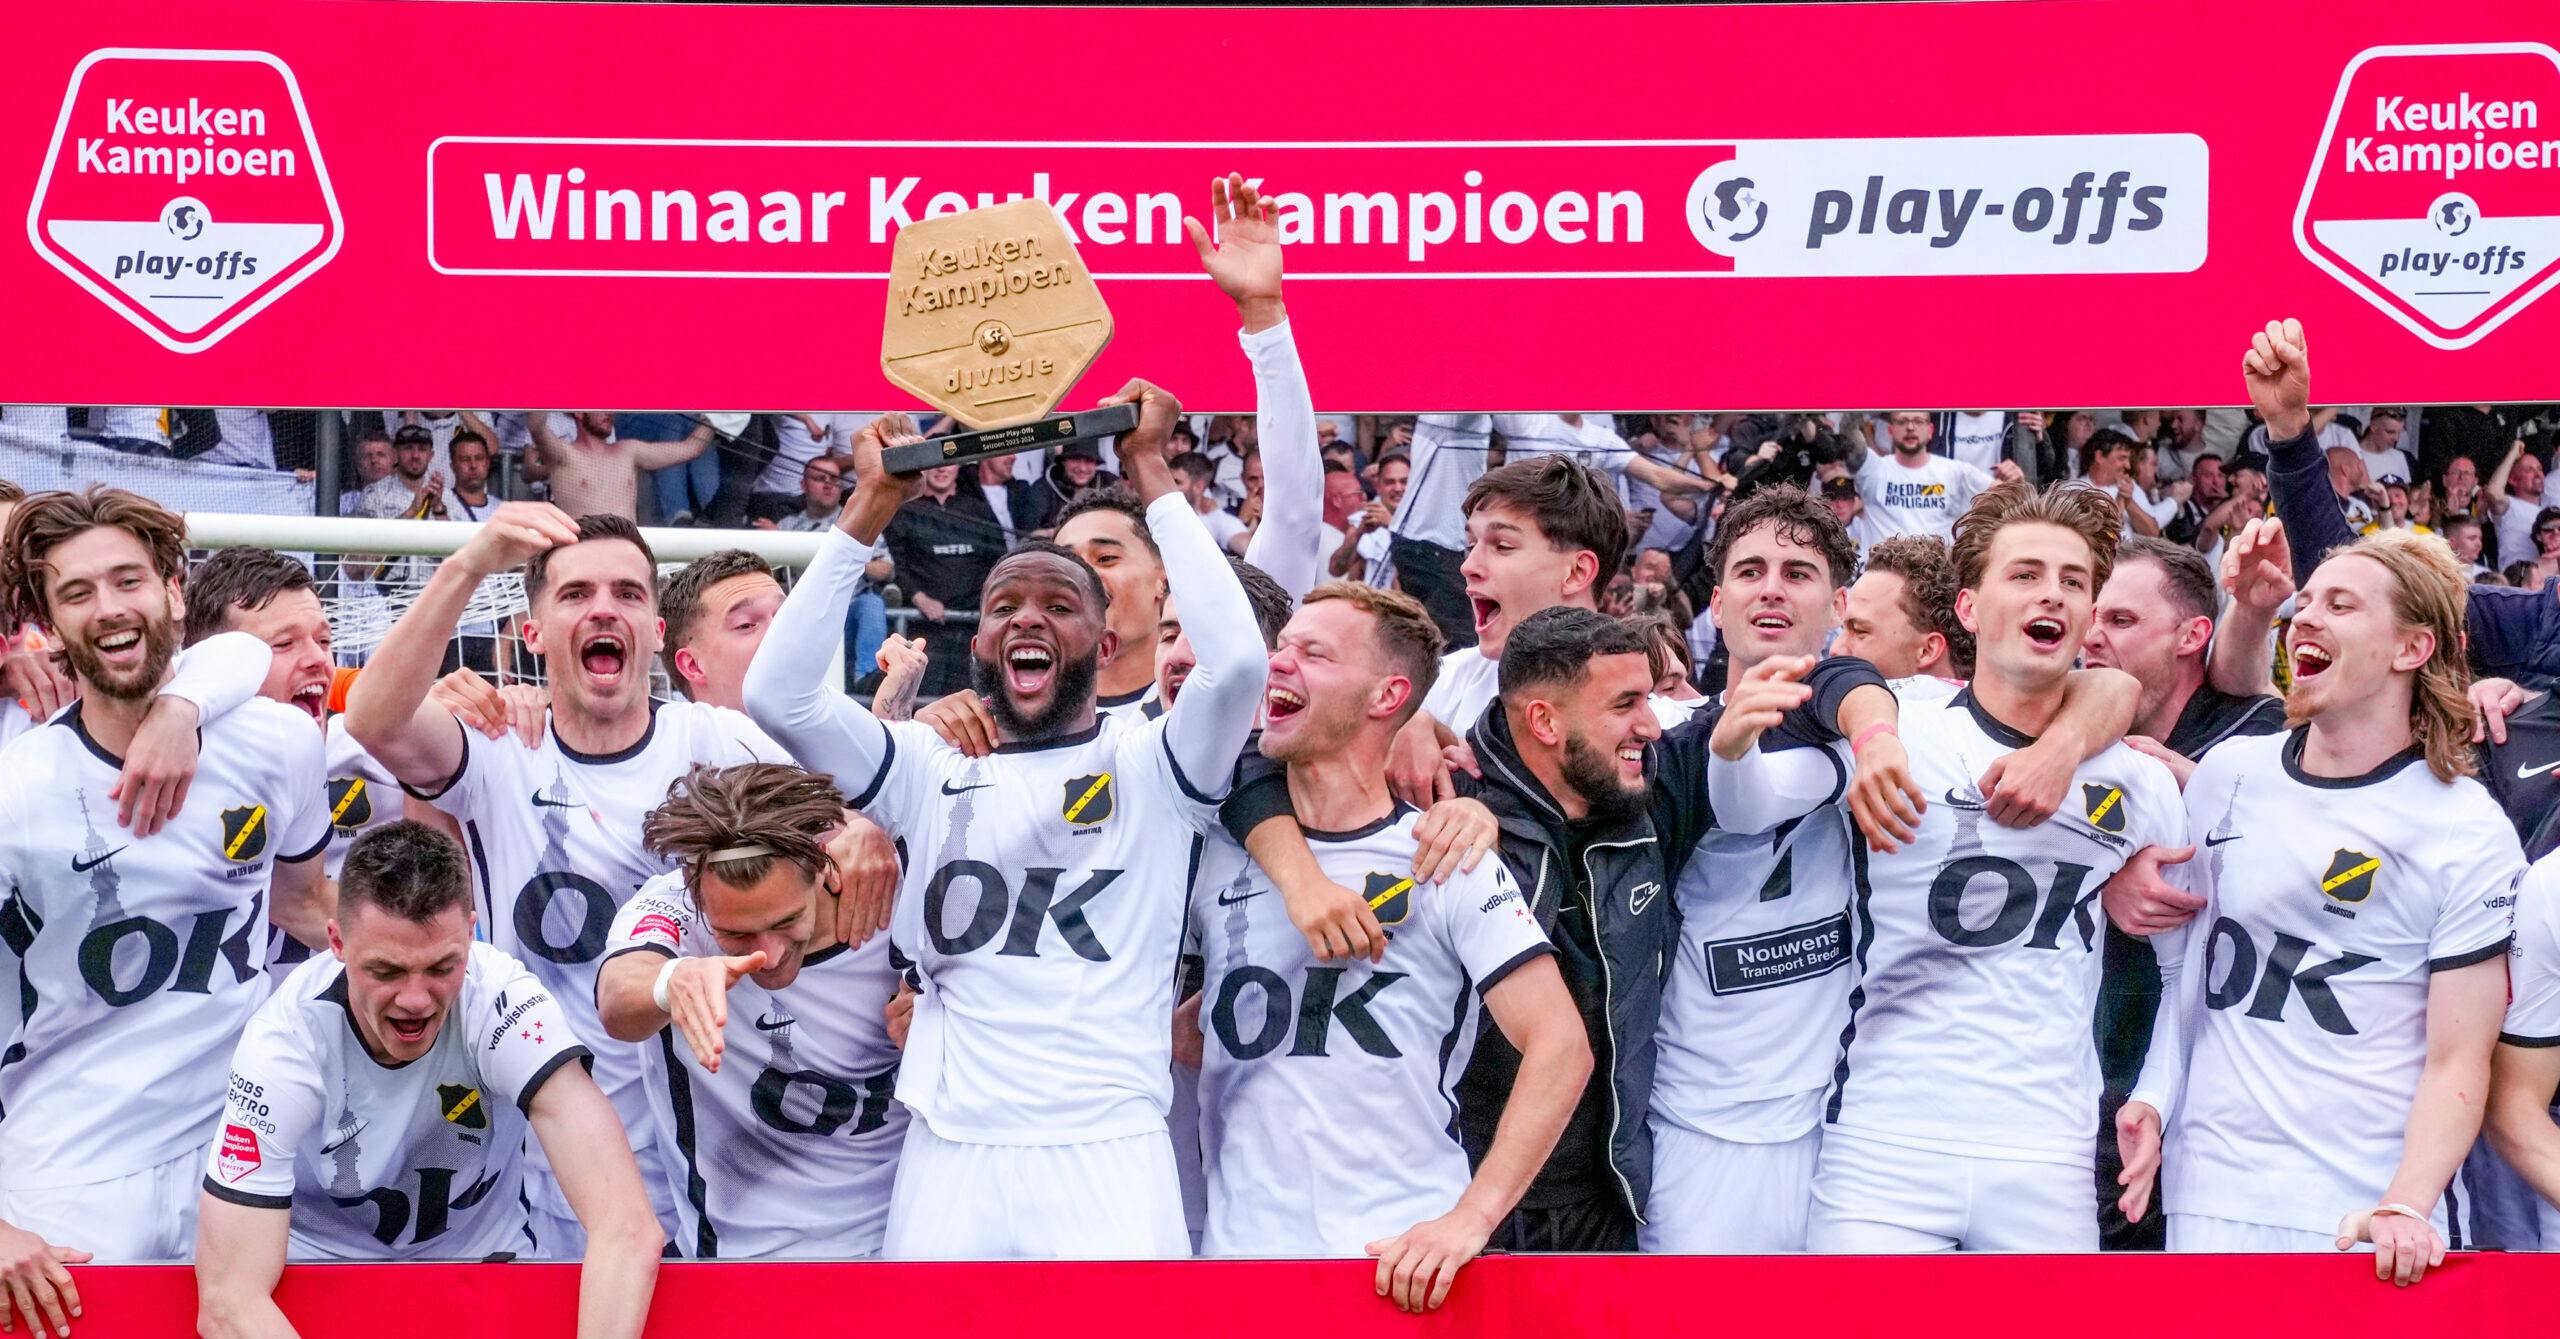 Cover Image for Keuken Kampioen Play-Offs in optima forma